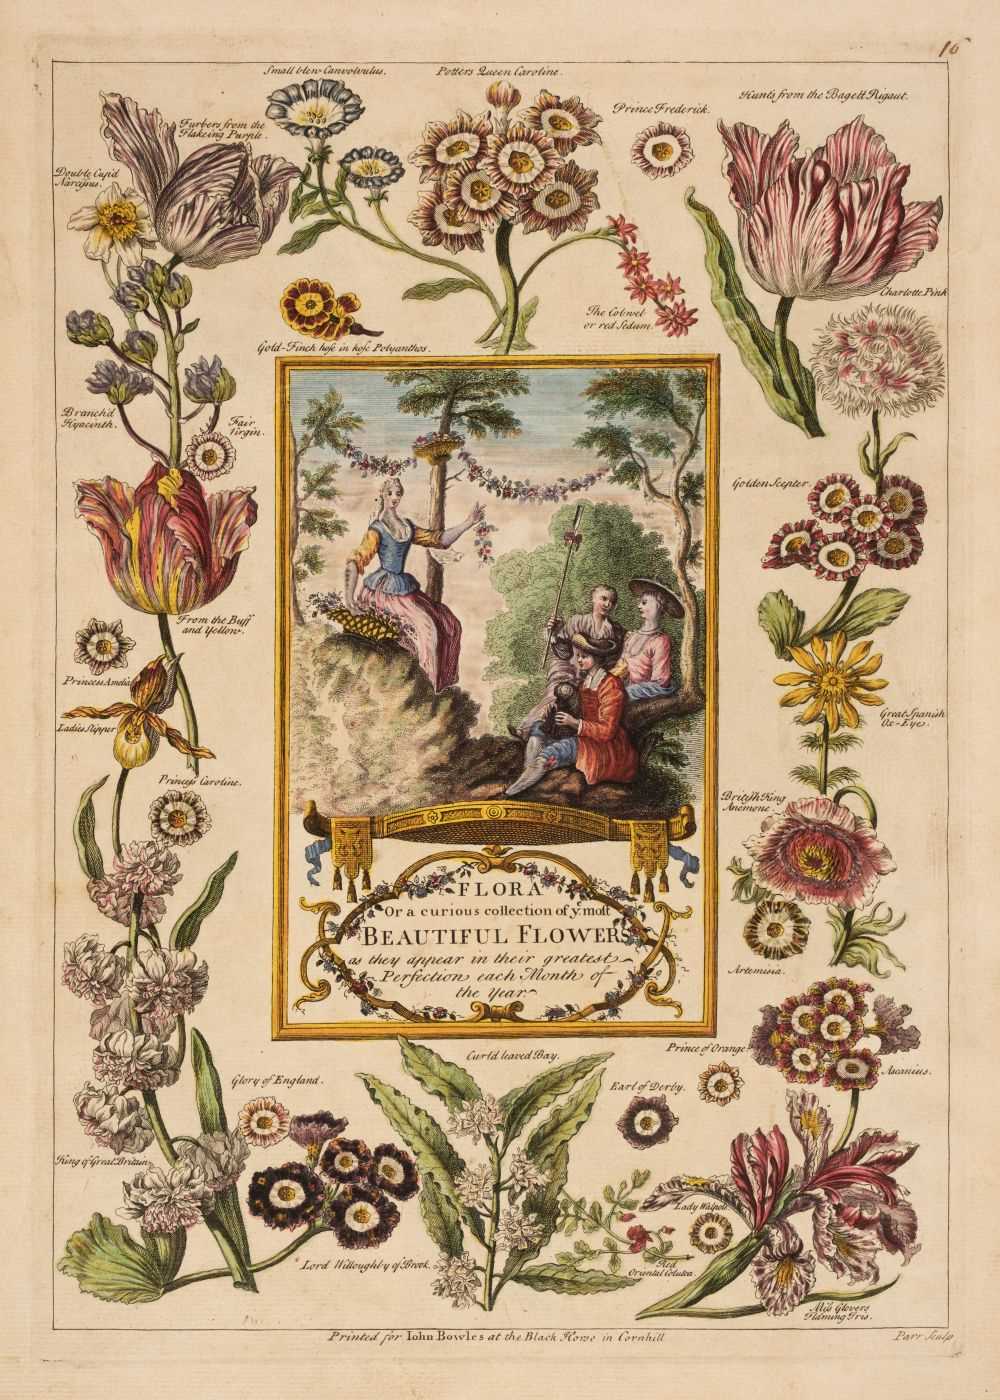 26 - Furber, Robert. Flora..., Beautiful Flowers as they appear... each Month, John Bowles, 1750